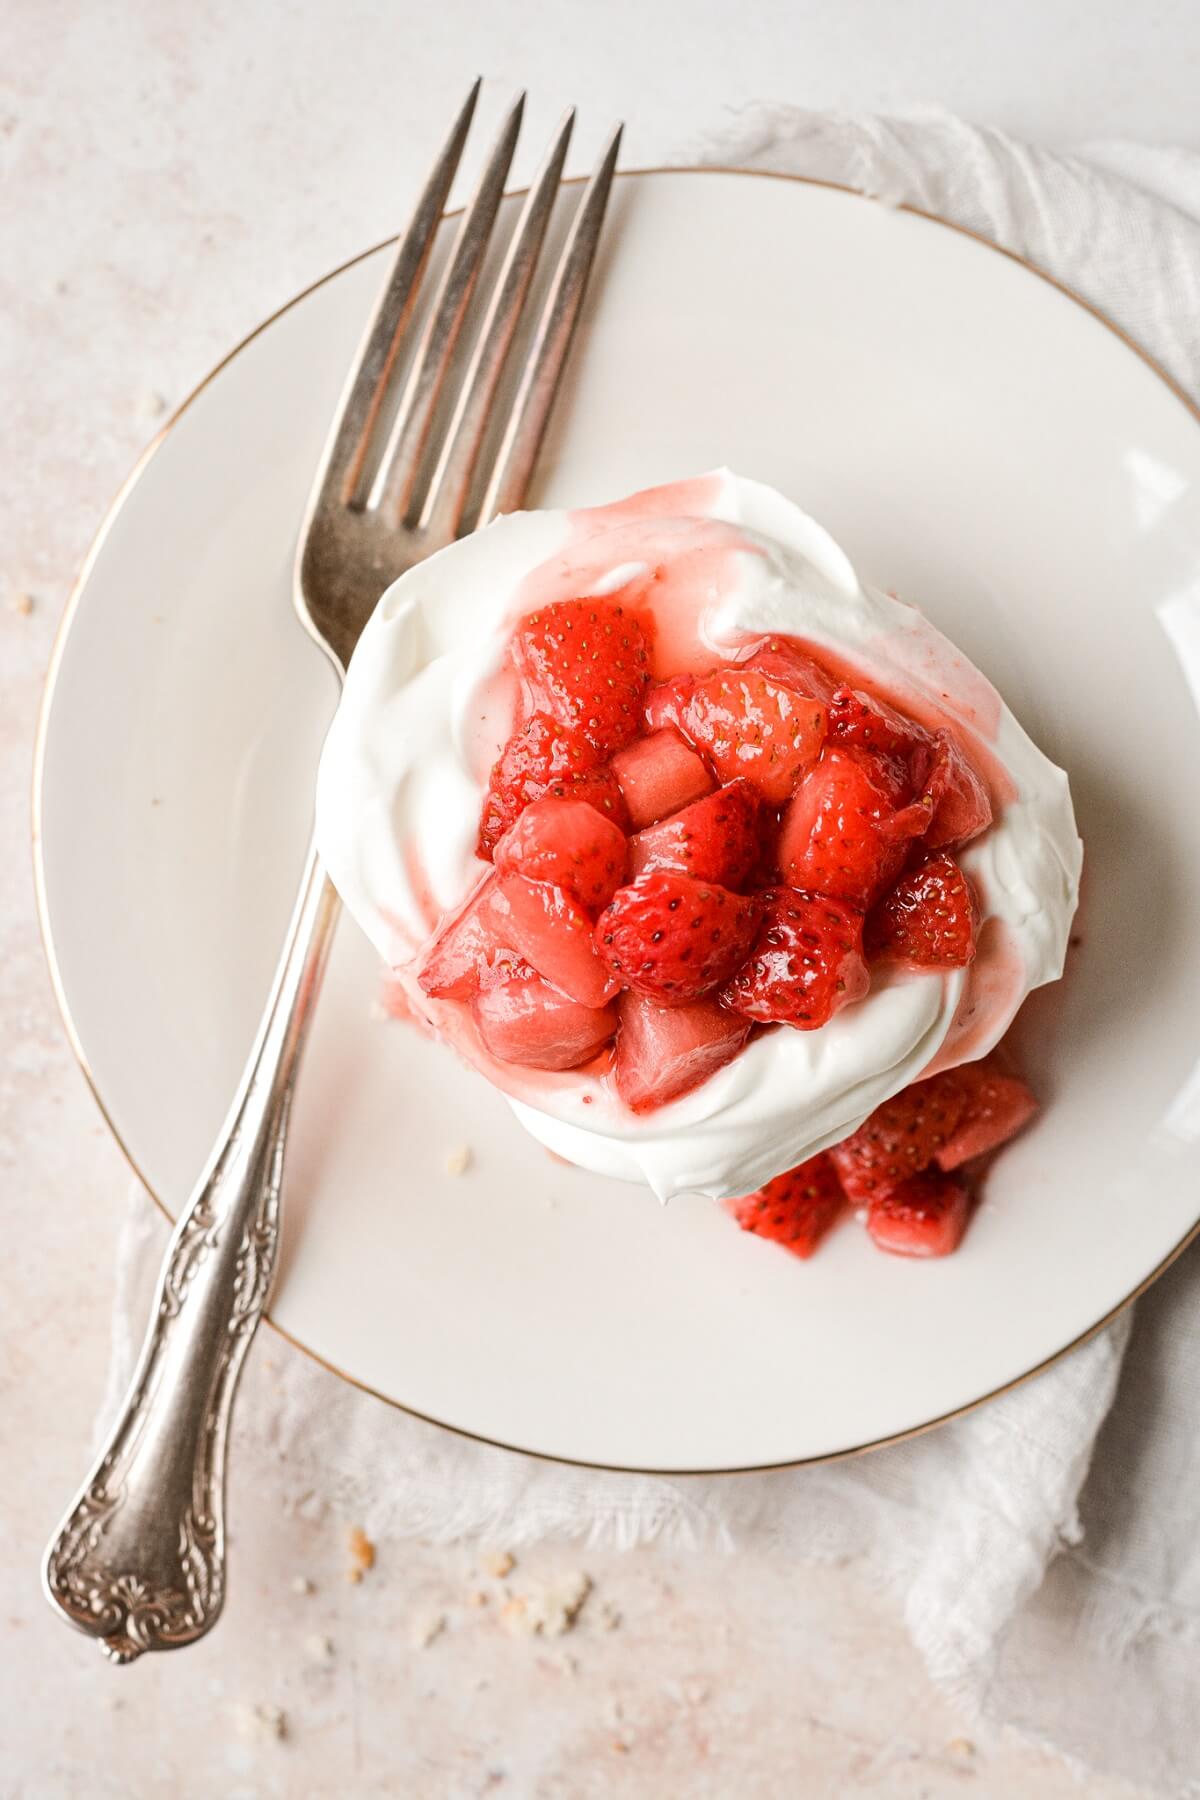 Strawberries and whipped cream on a mini strawberry shortcake.